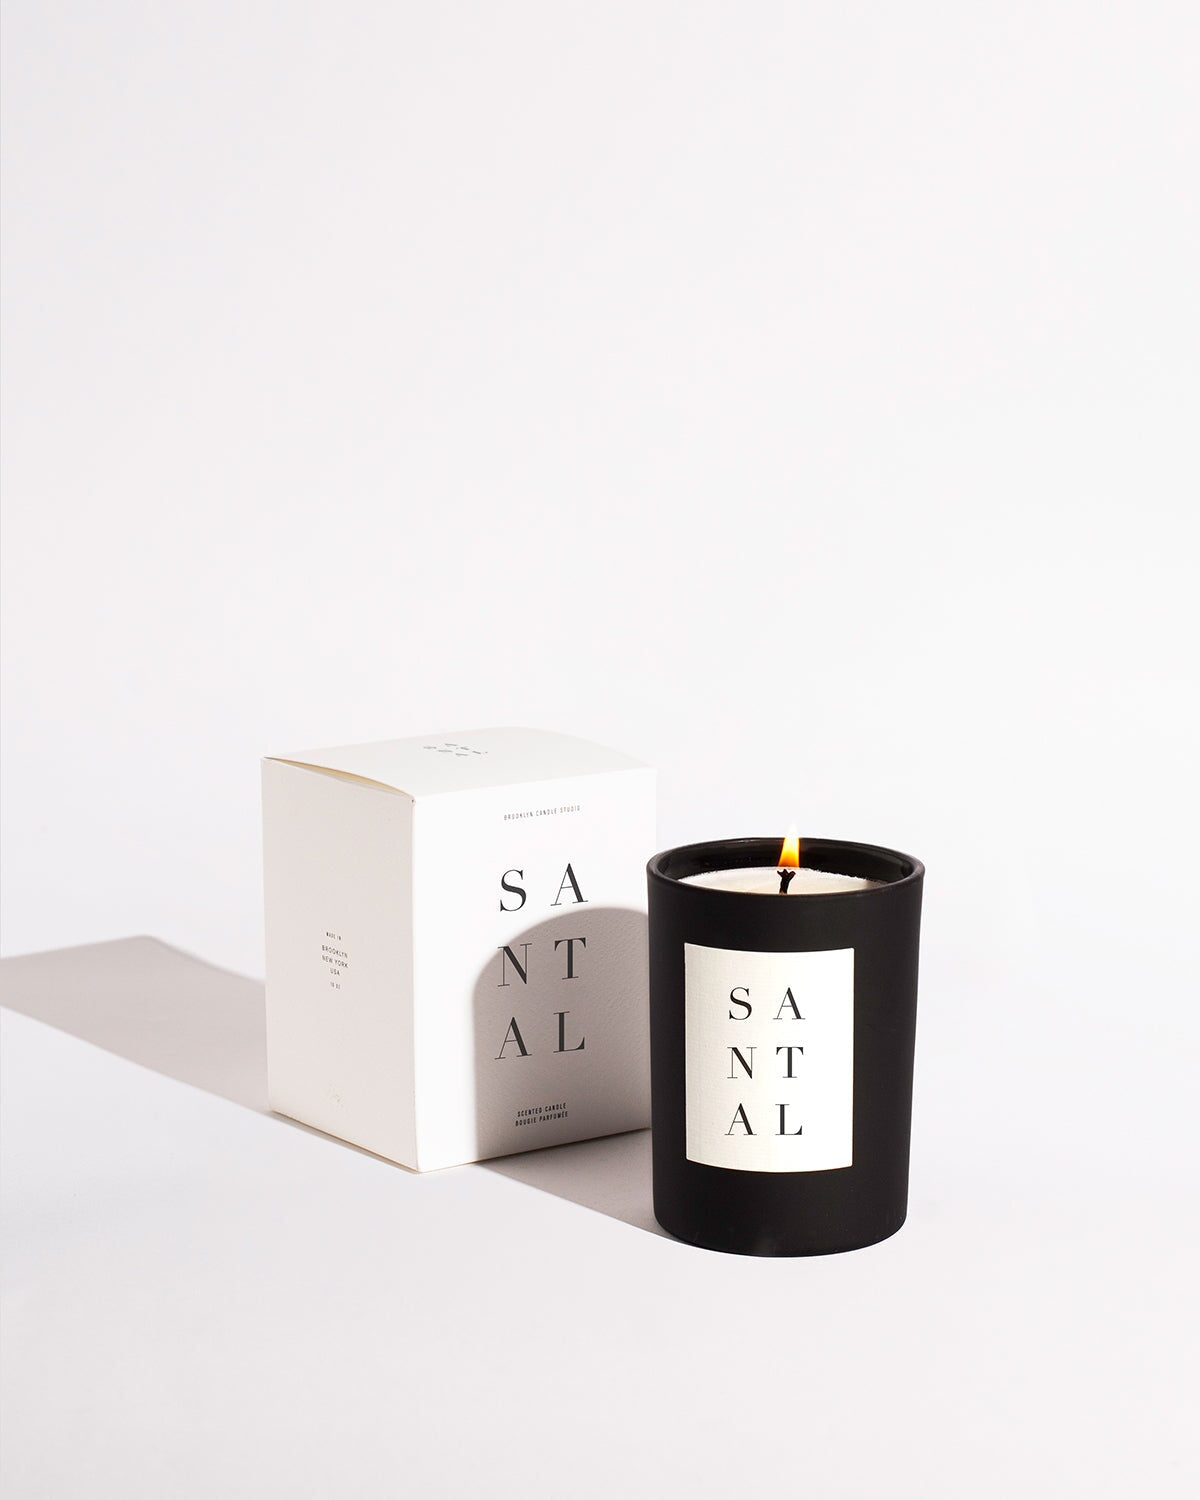 Santal Noir Candle by Brooklyn Candle Studio - Sumiye Co